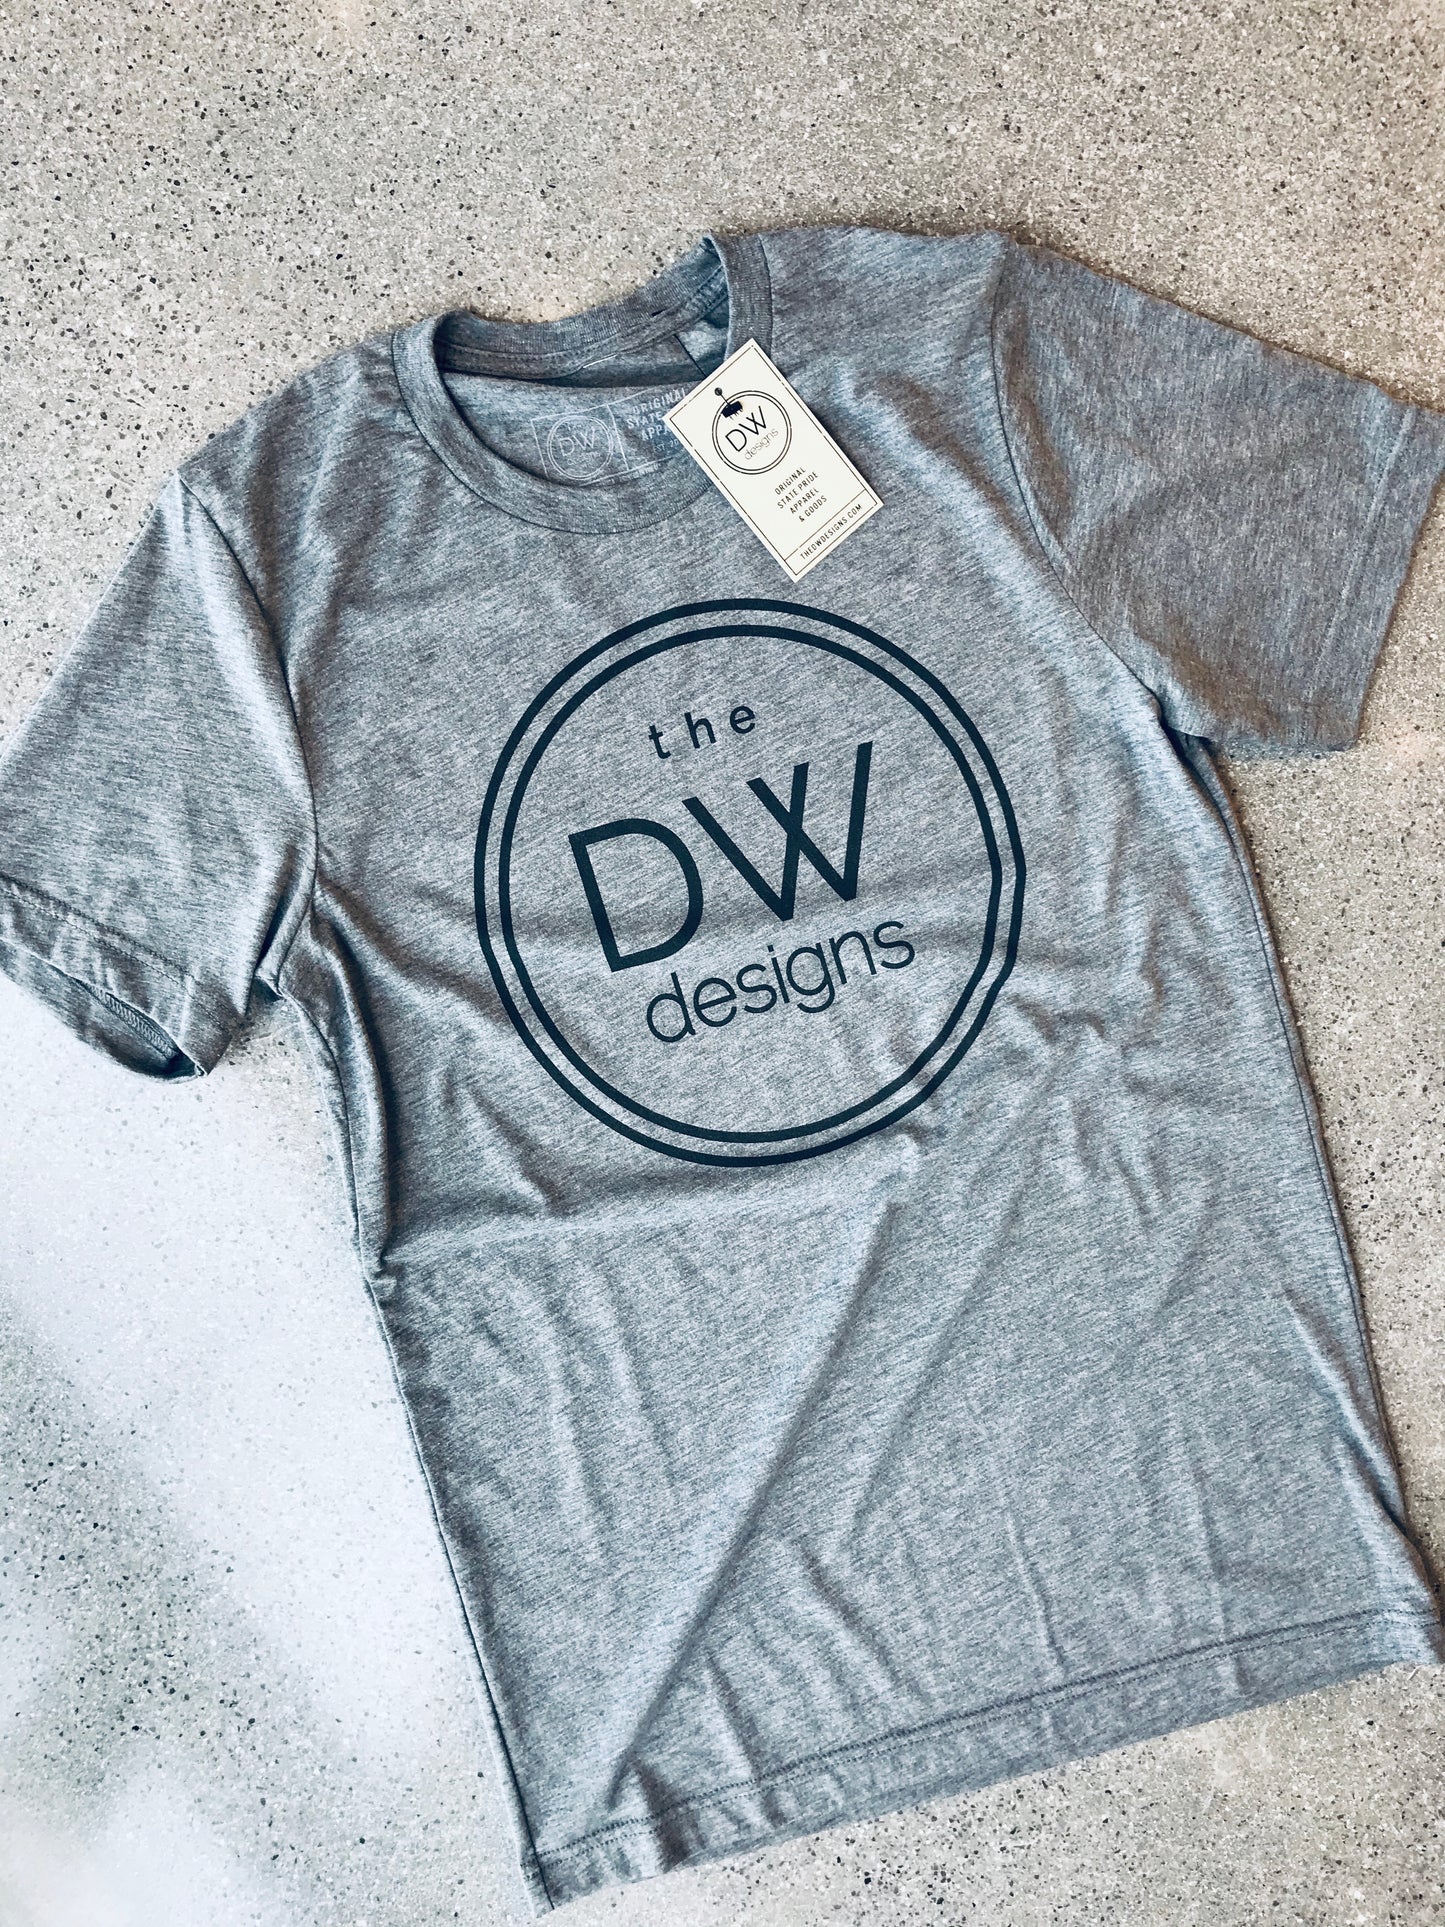 The DW designs logo tee